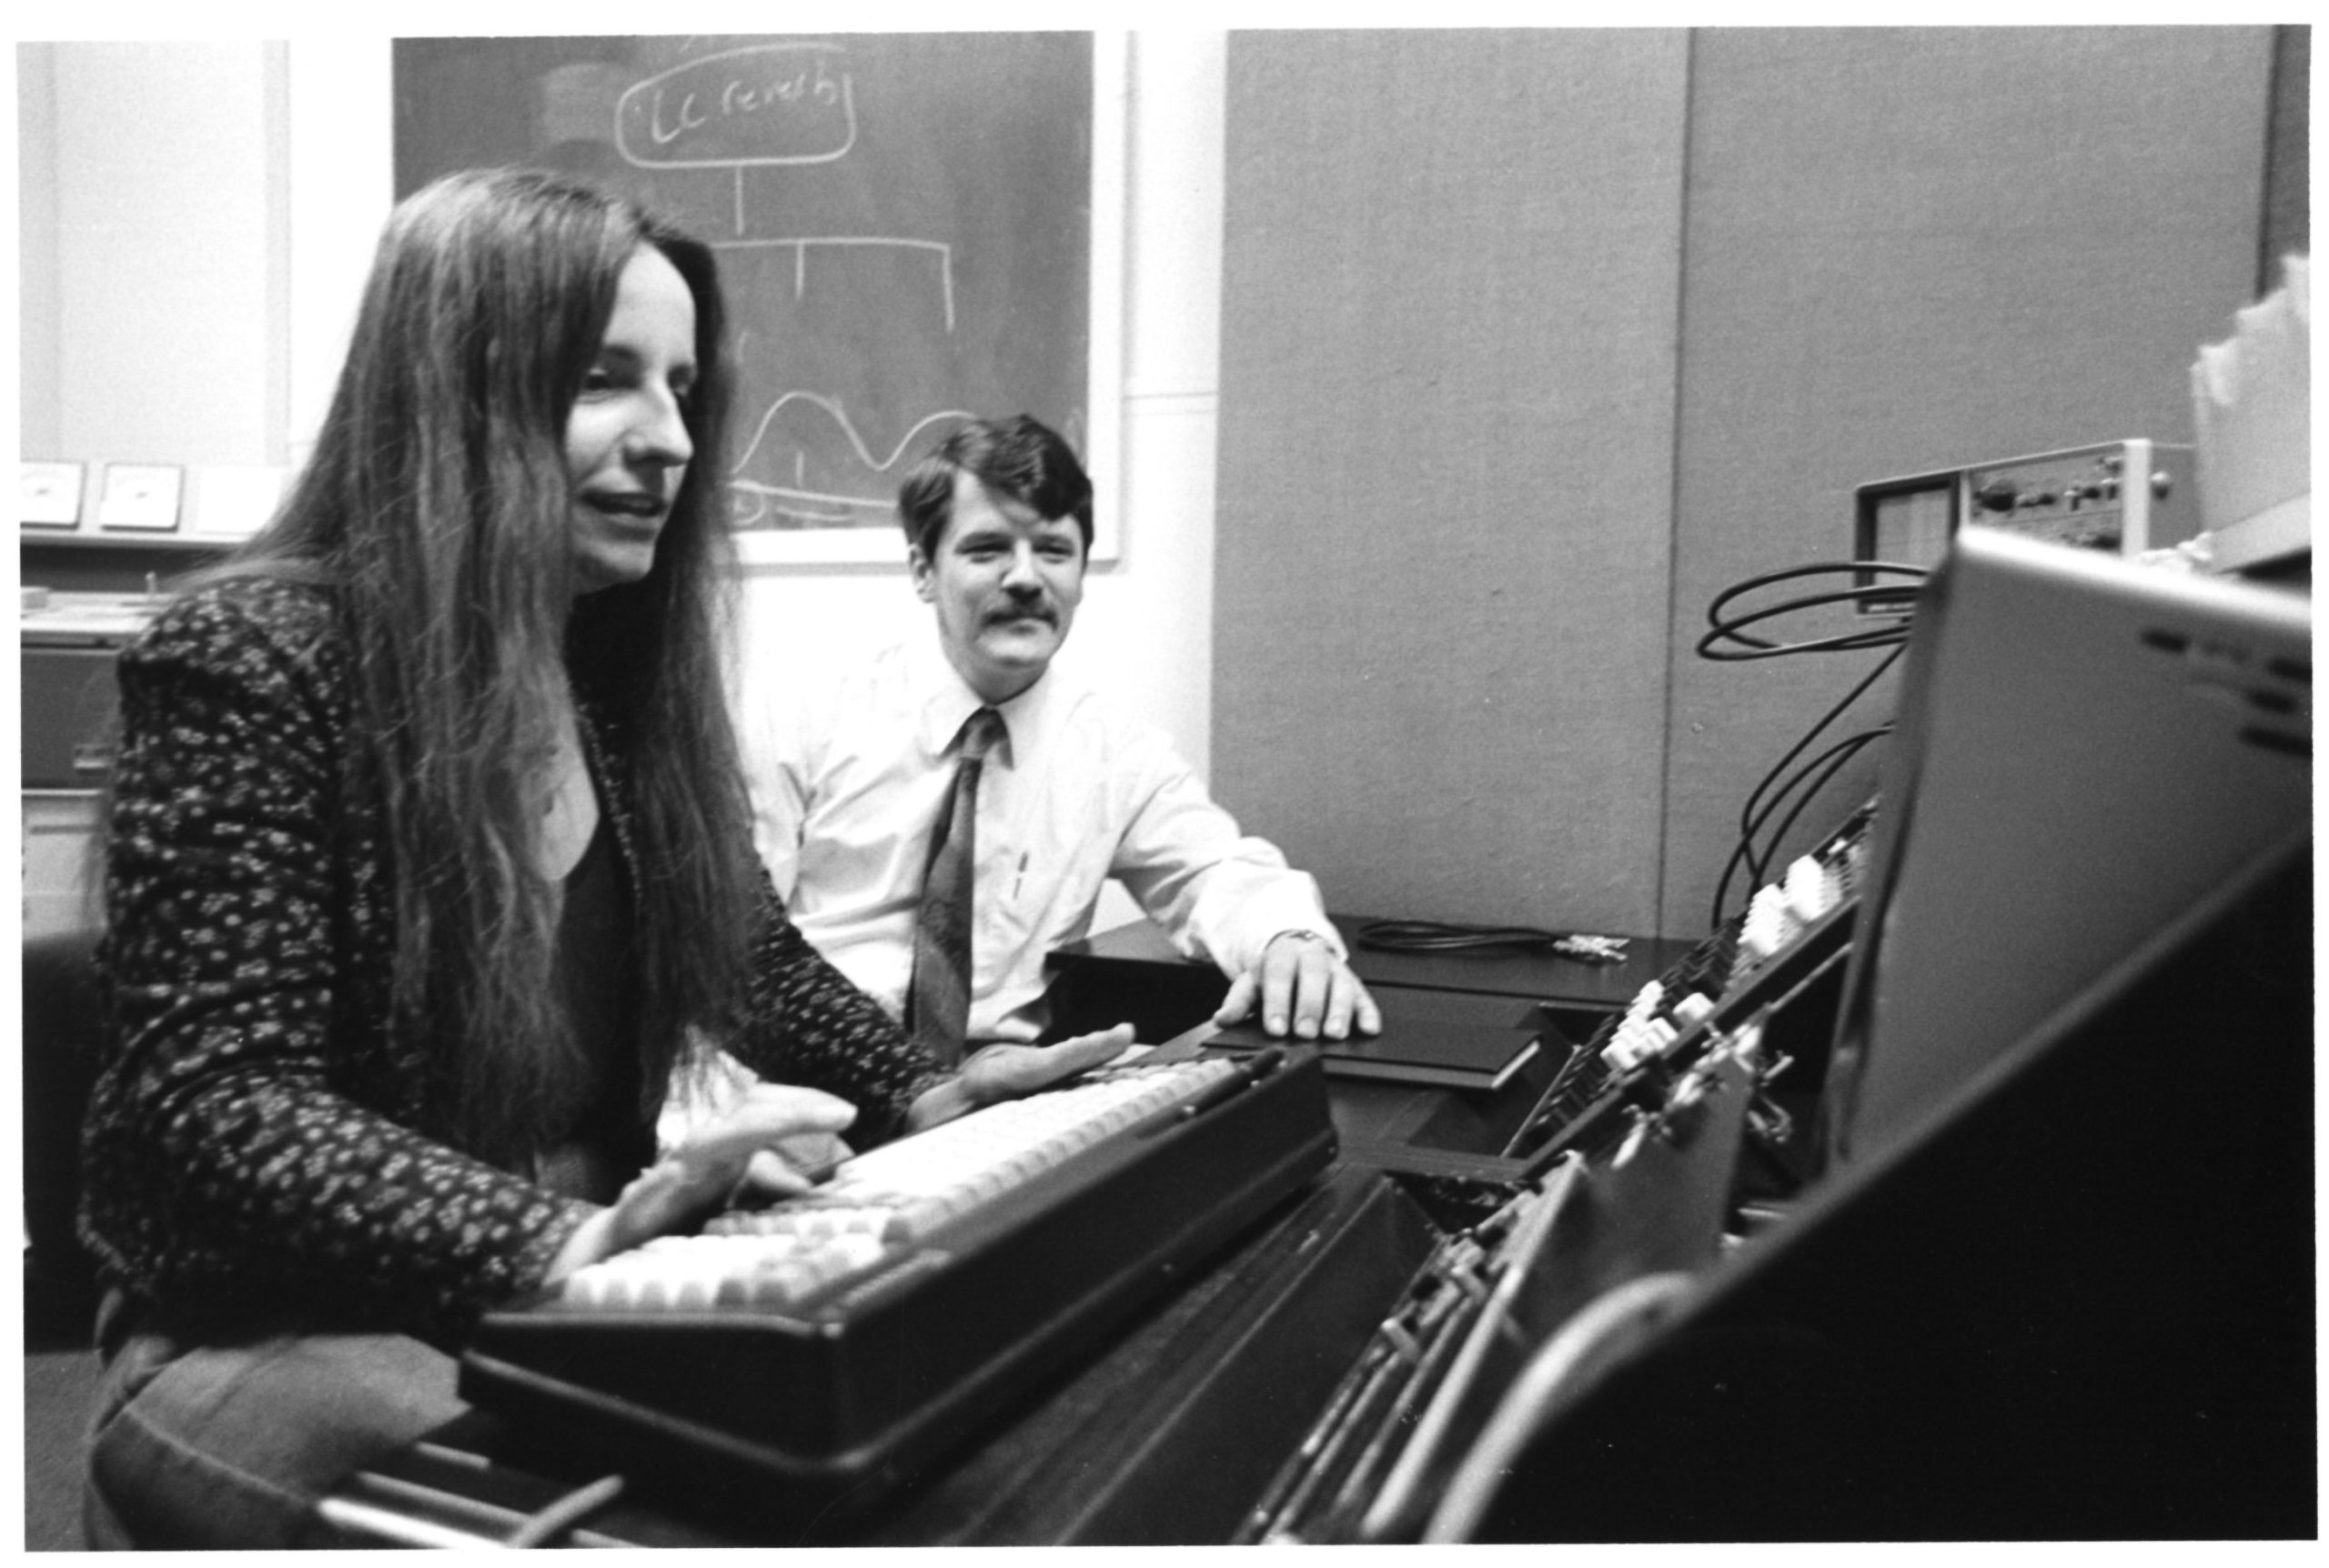 Allan Schindler with student in ECMC (April 1984)